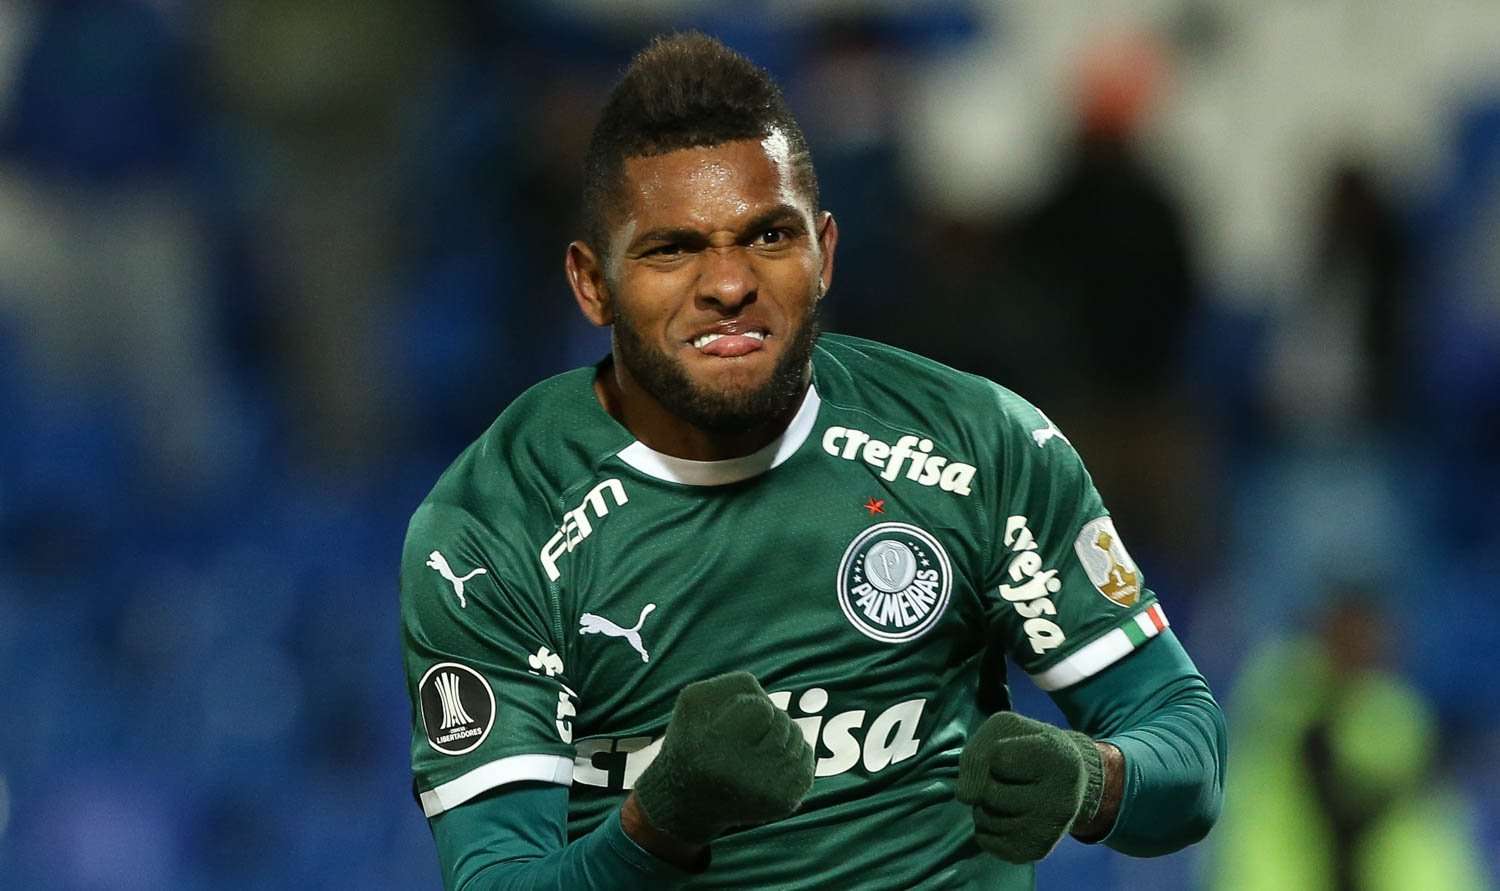 De vuelta al gol, Borja anotó y evitó la derrota del Palmeiras por Copa Libertadores